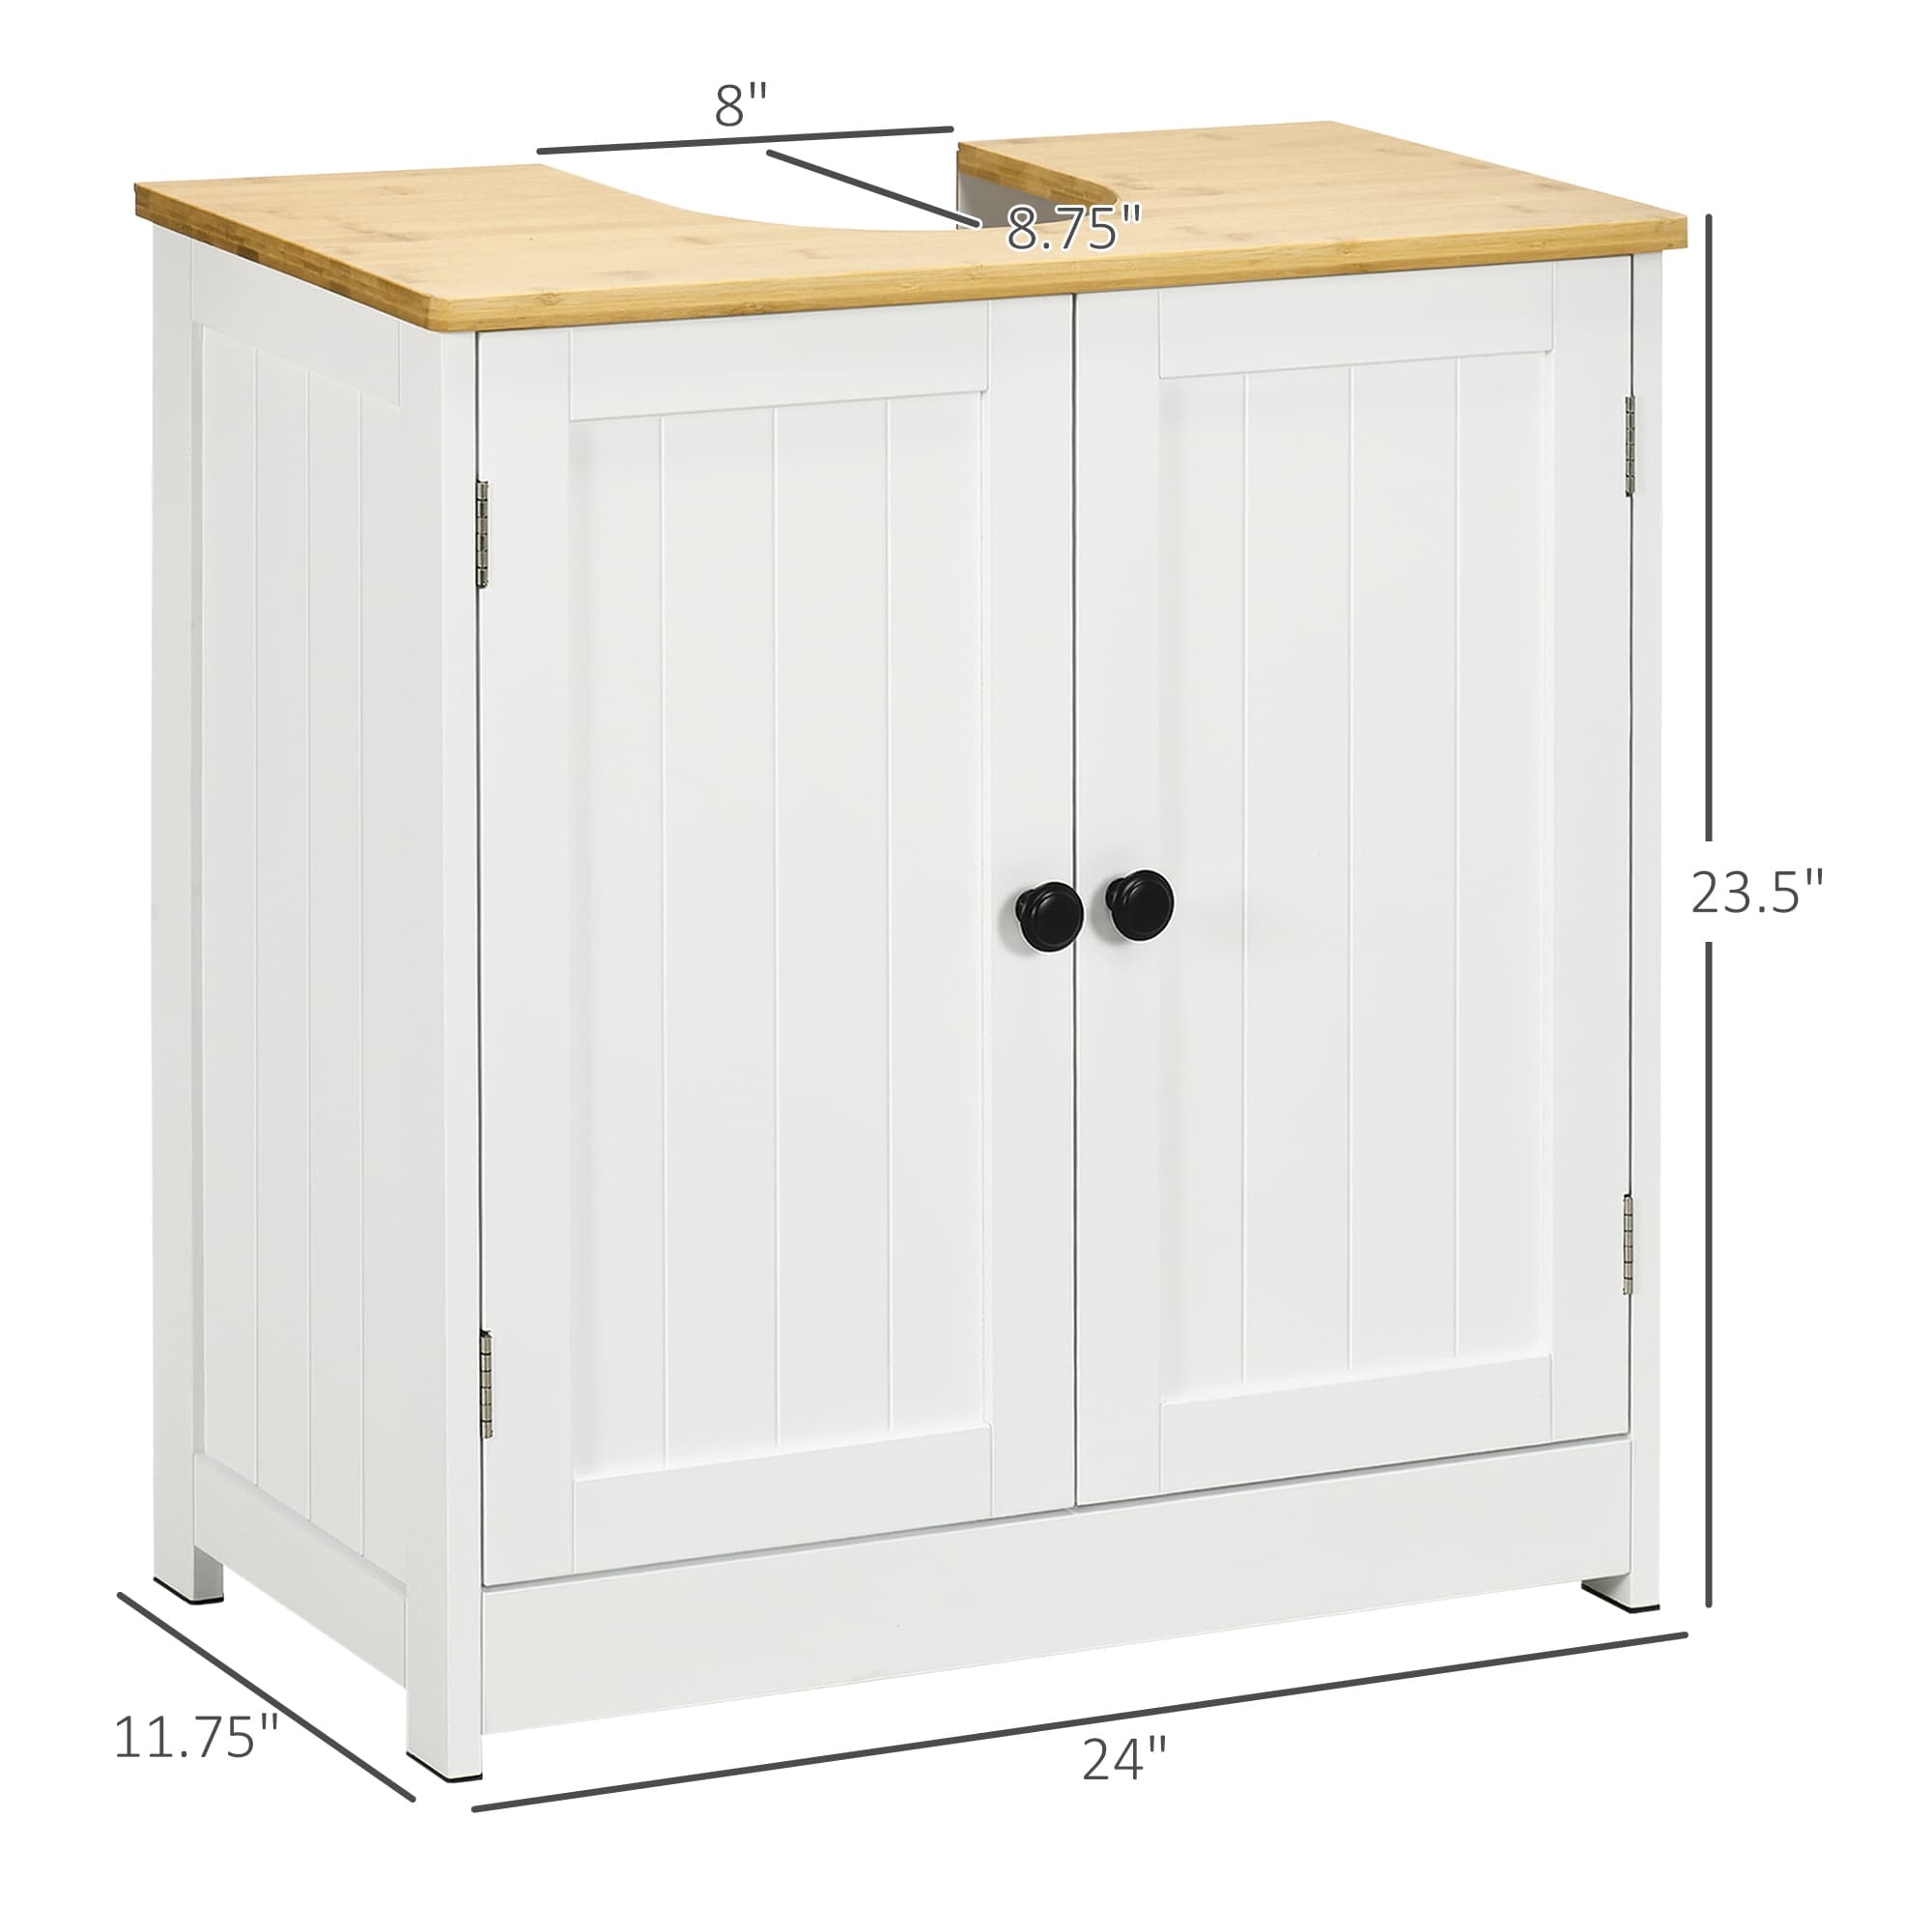 https://ak1.ostkcdn.com/images/products/is/images/direct/ca95611089d2f9d771ebf8dfac4242e876876f78/kleankin-Modern-Bathroom-Sink-Cabinet%2C-Pedestal-Sink-Storage-Cabinet-with-Double-Doors-and-Adjustable-Shelf%2C-Bathroom-Vanity.jpg